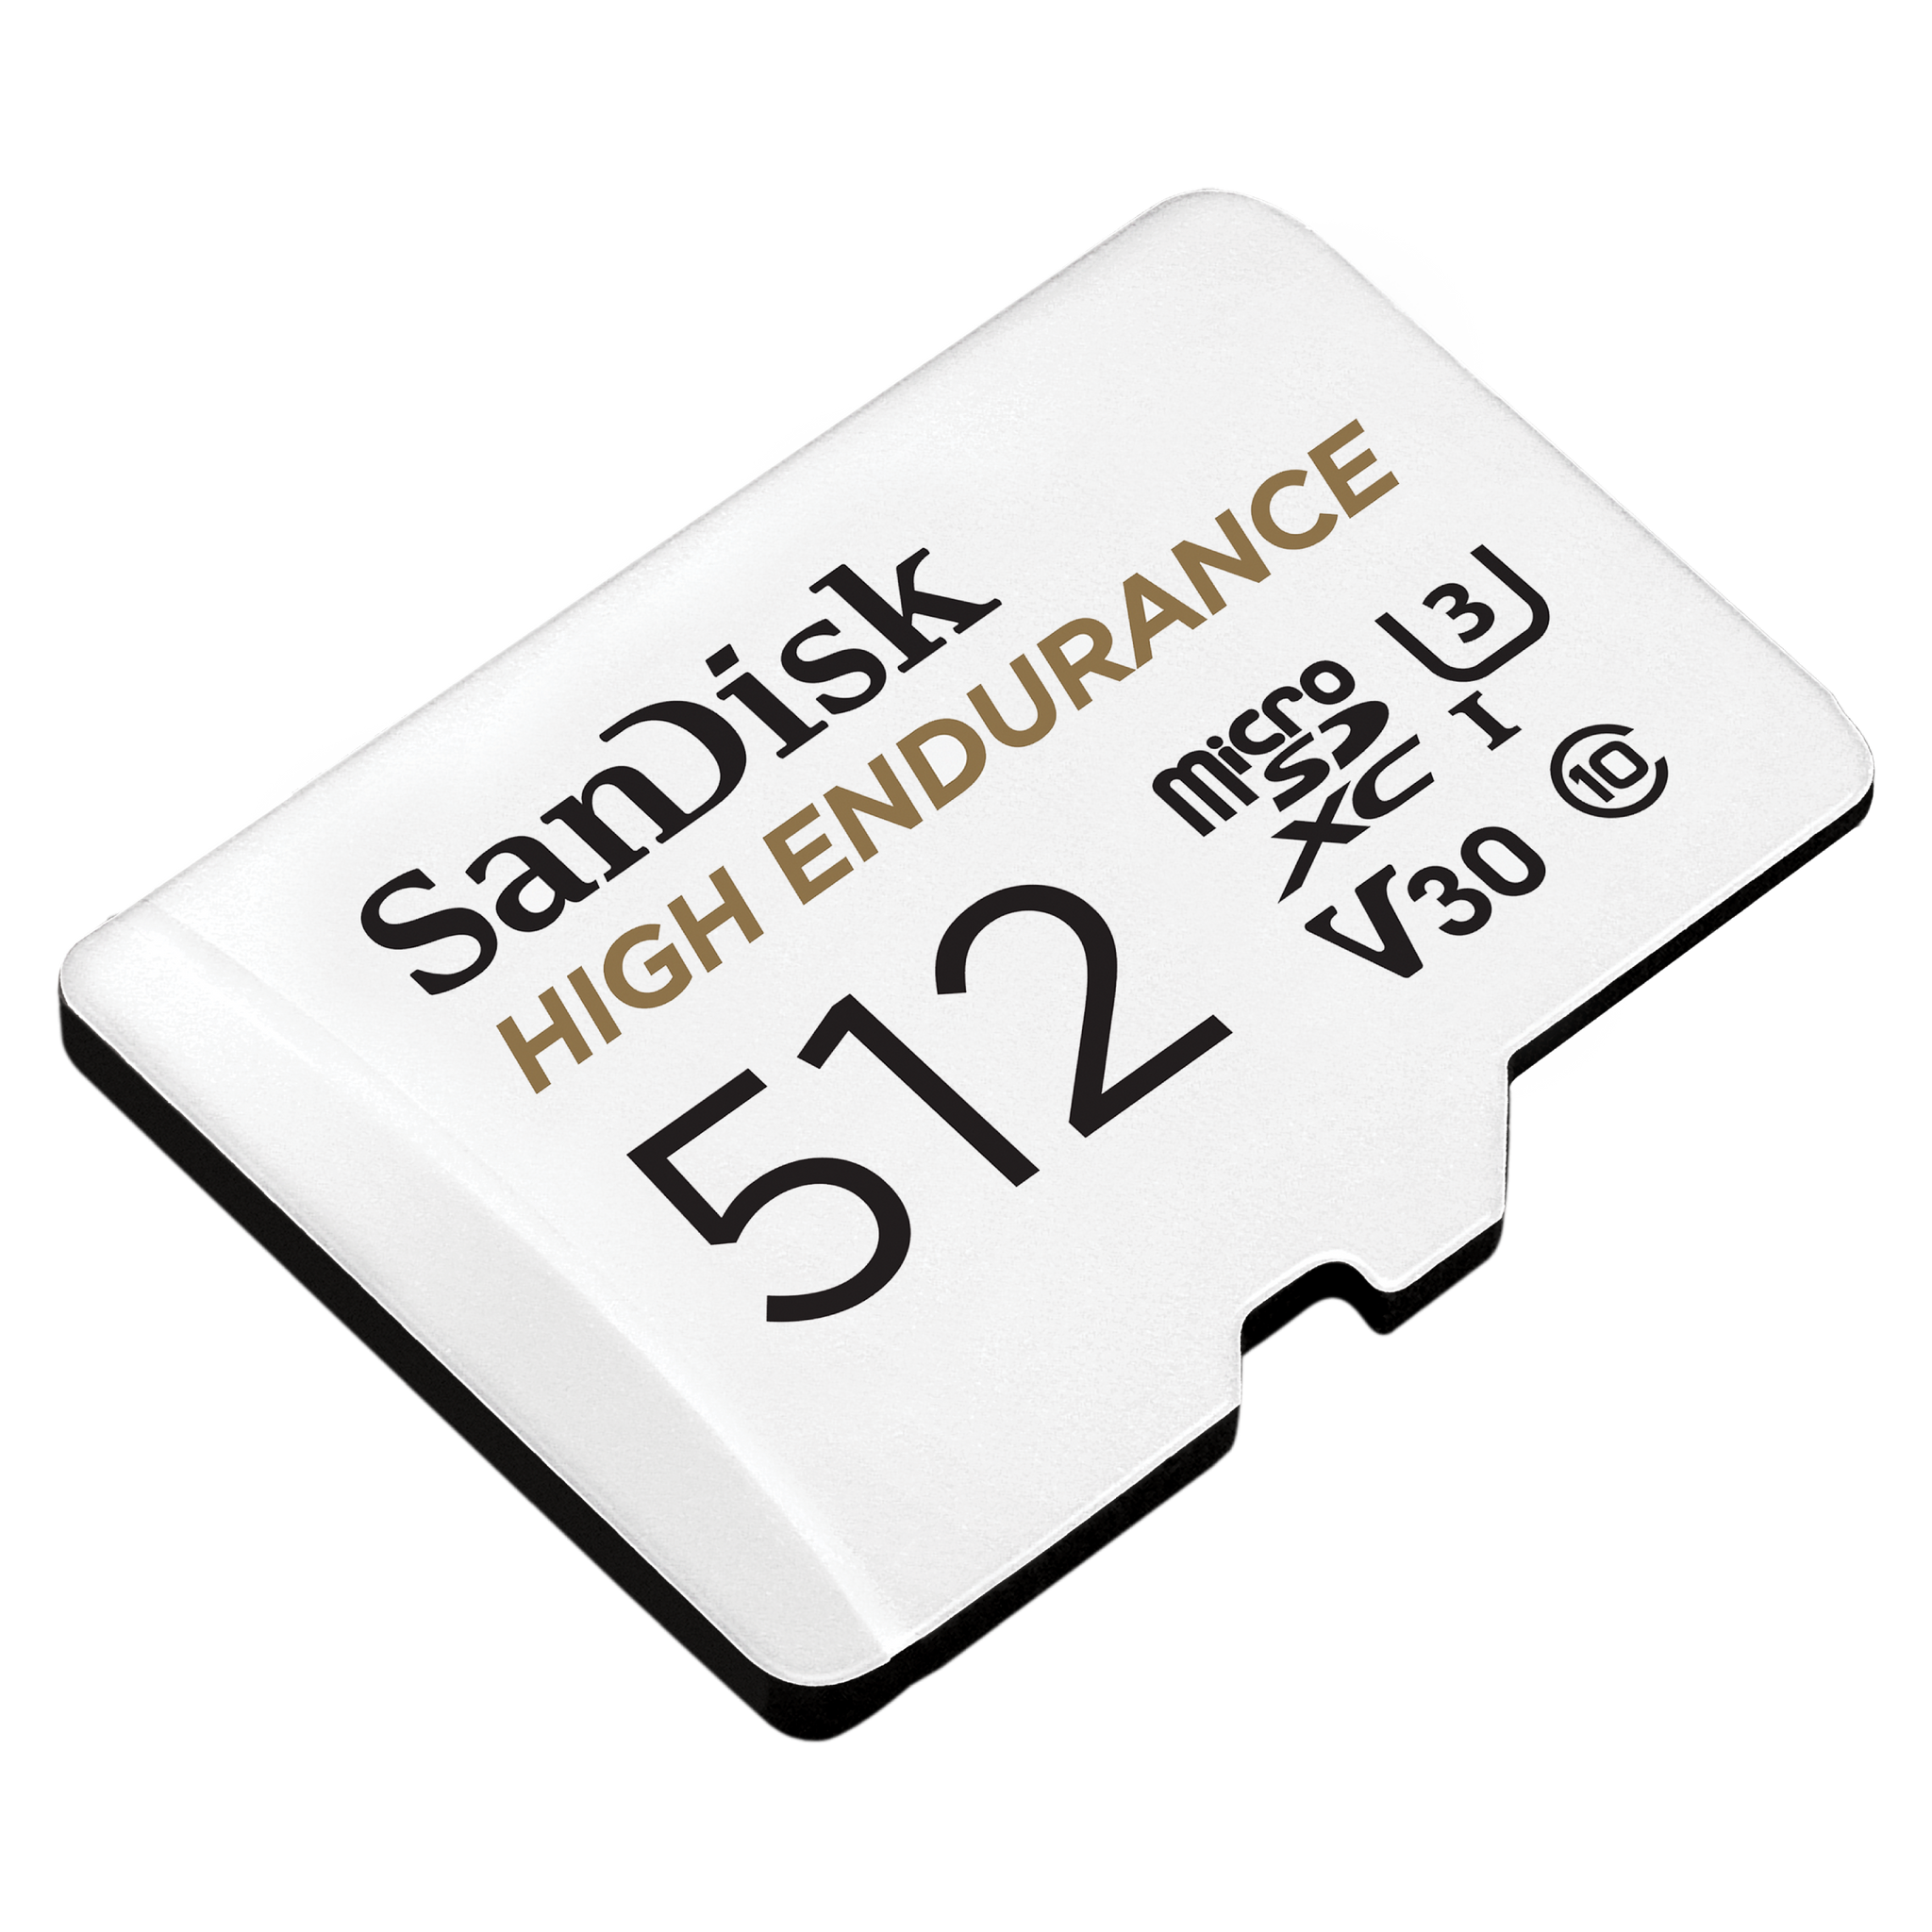 SanDisk High Endurance microSDXC 512 Go + adaptateur SD